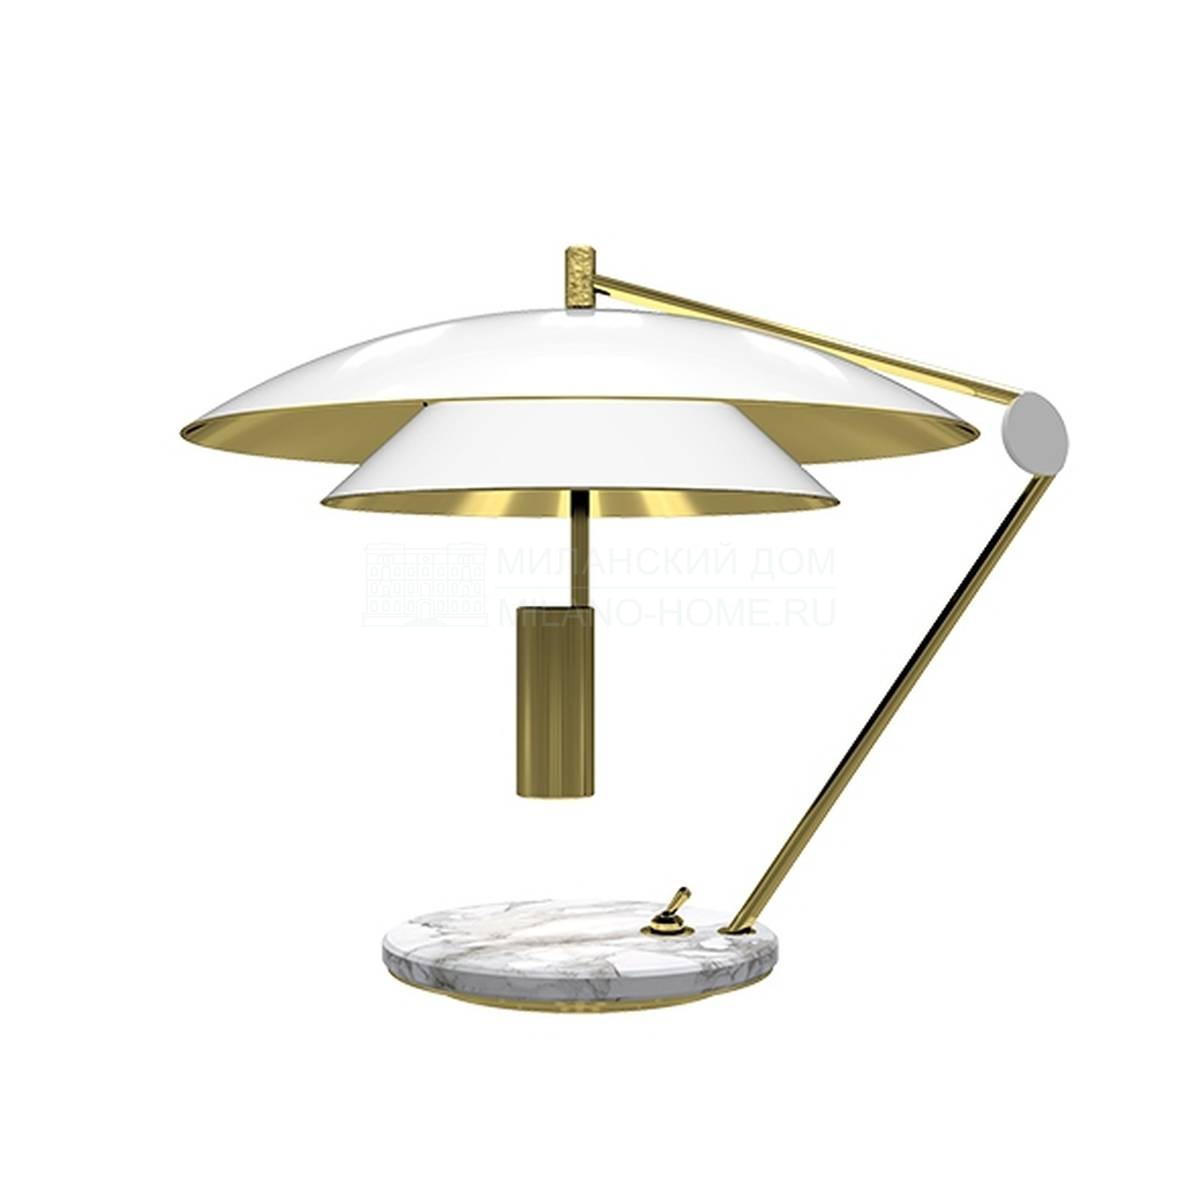 Настольная лампа Basie table из Португалии фабрики DELIGHTFULL